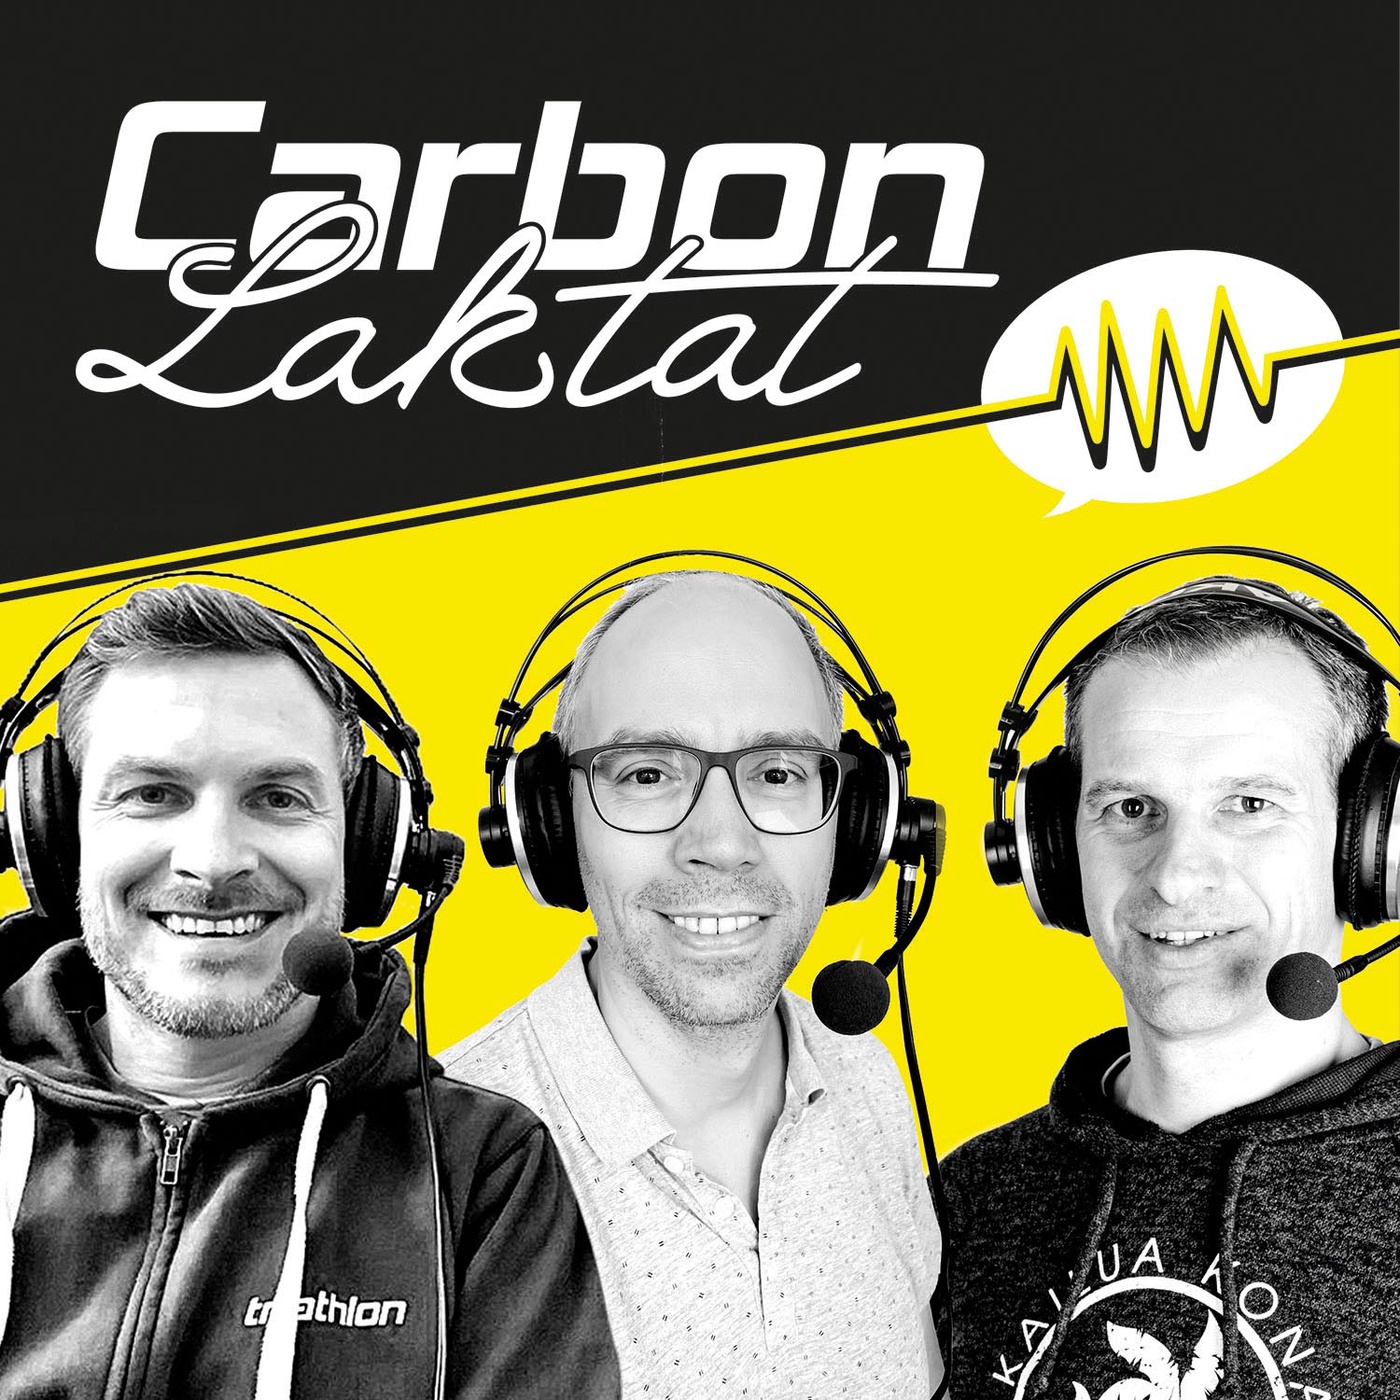 Carbon & Laktat: Deutsches Podium in Finnland